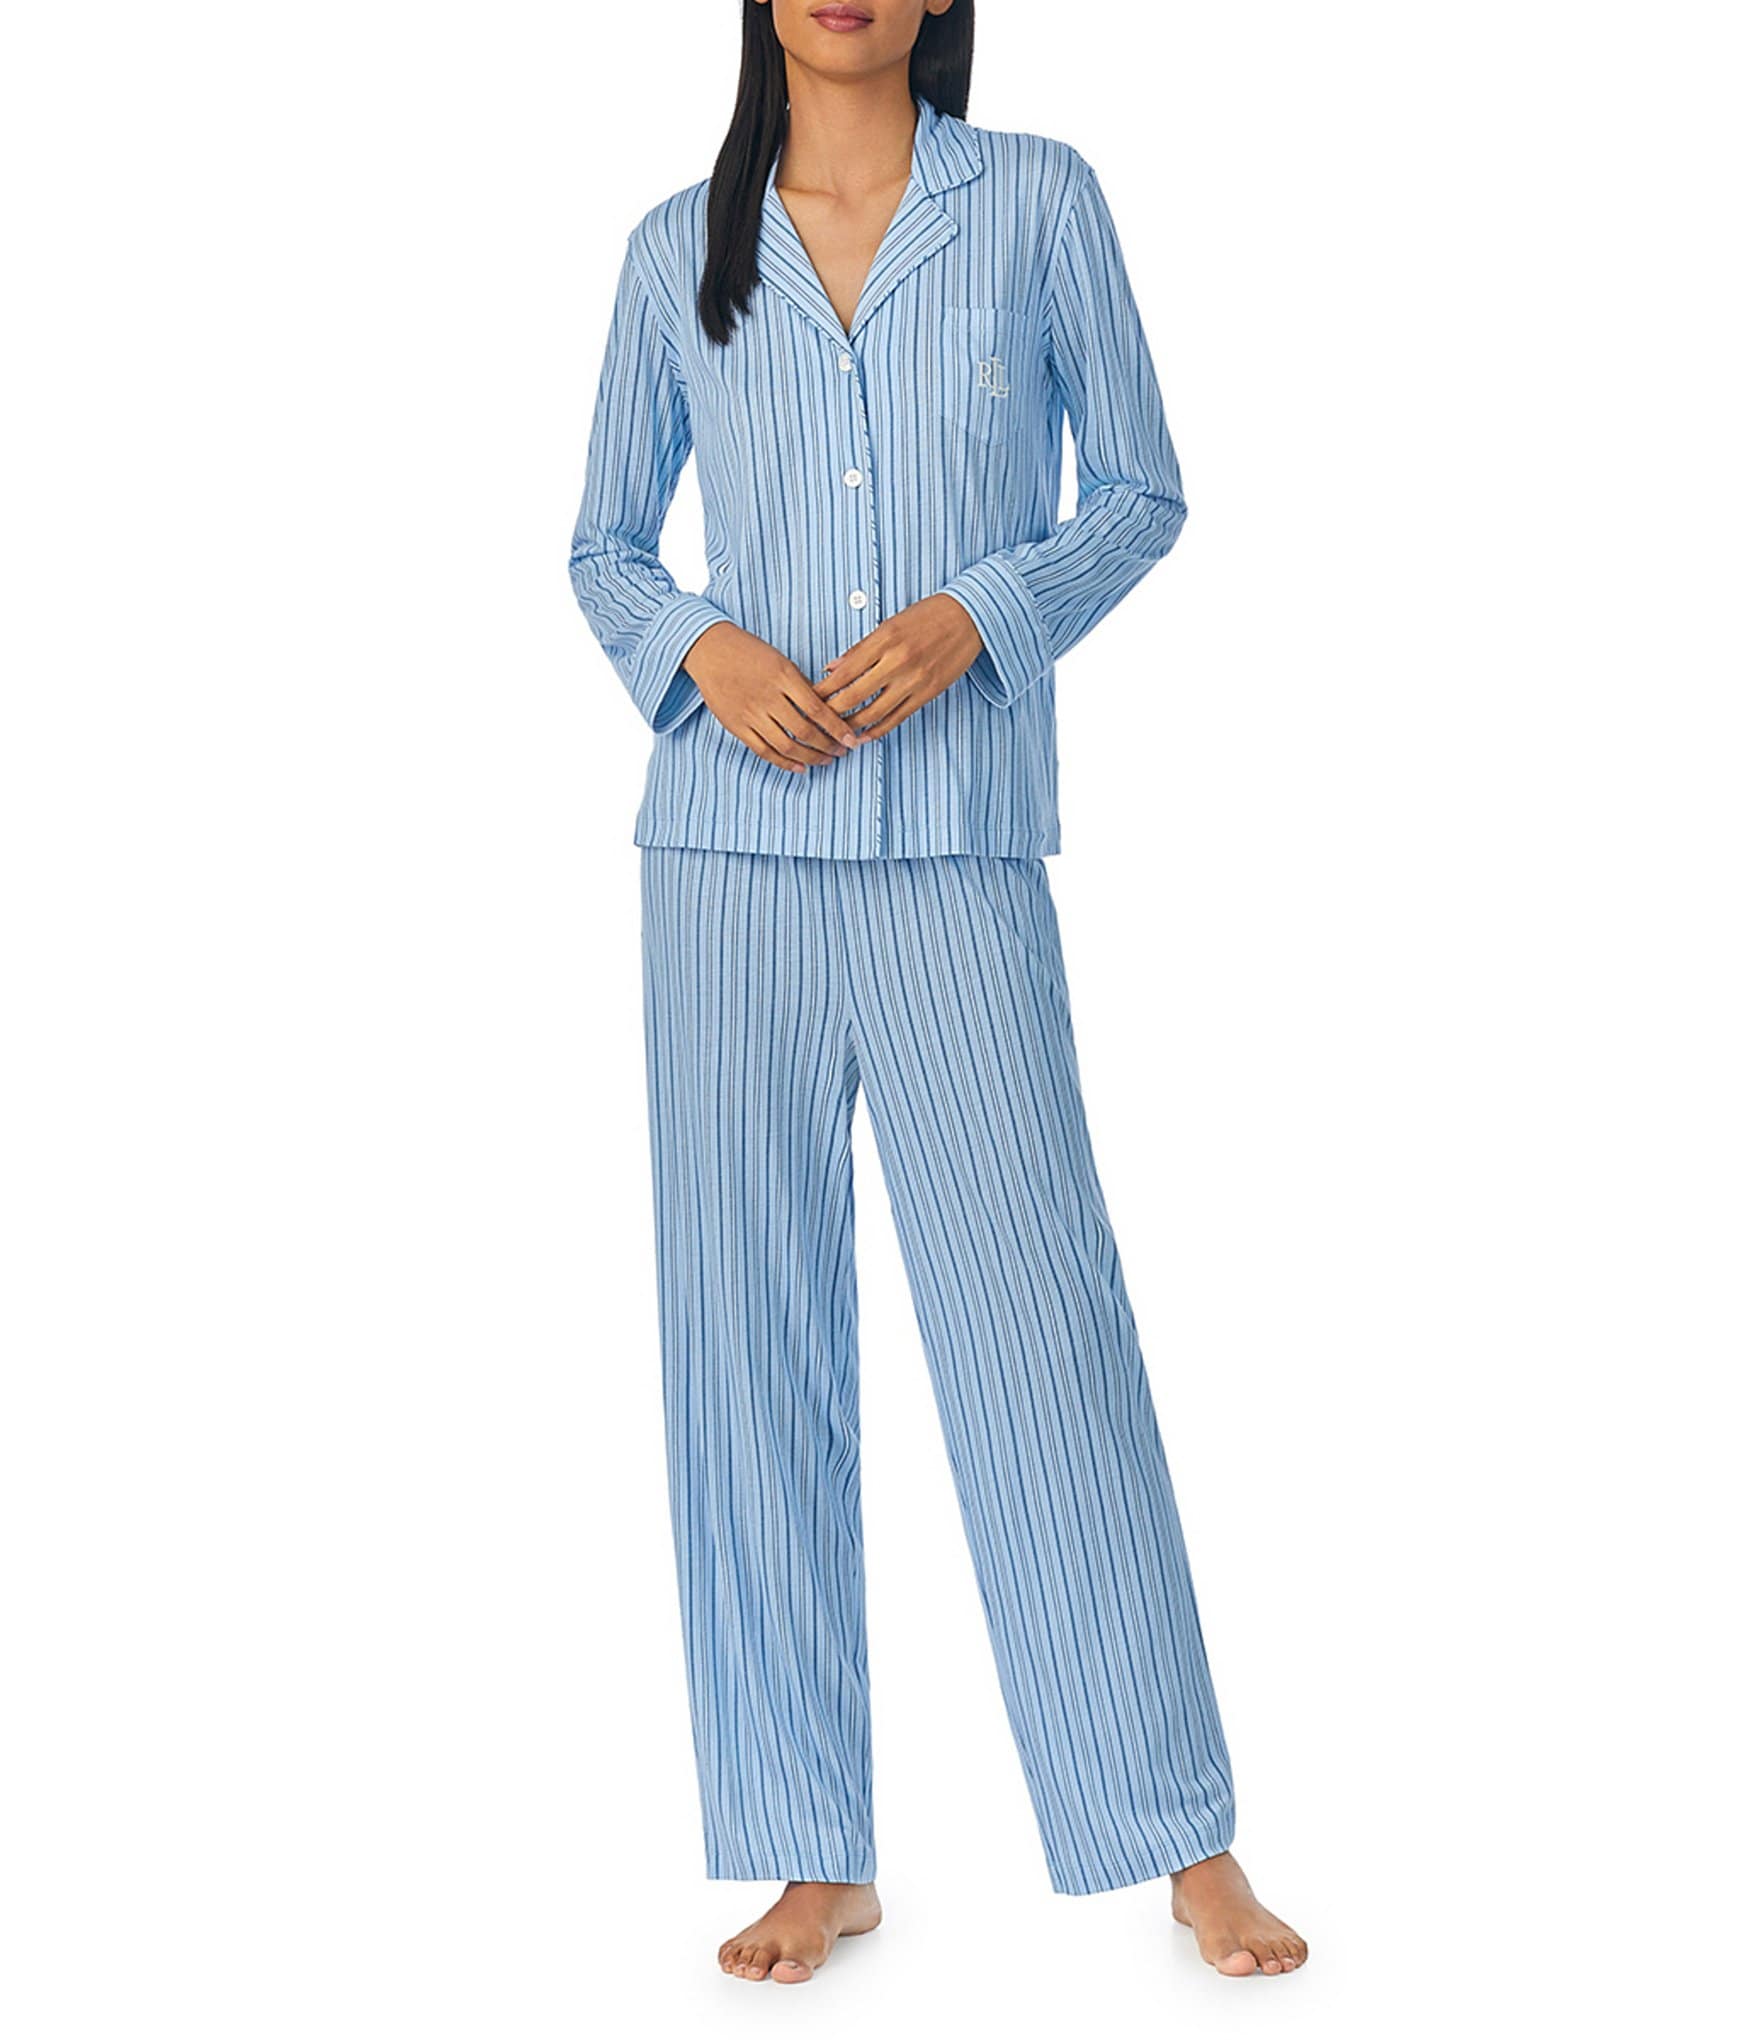 Stylish Striped Bodycon Pajama Set For Women Short Sleeve Crop Top And  Bandage Bottom Kmart Womens Sleepwear From Armhole, $19.98